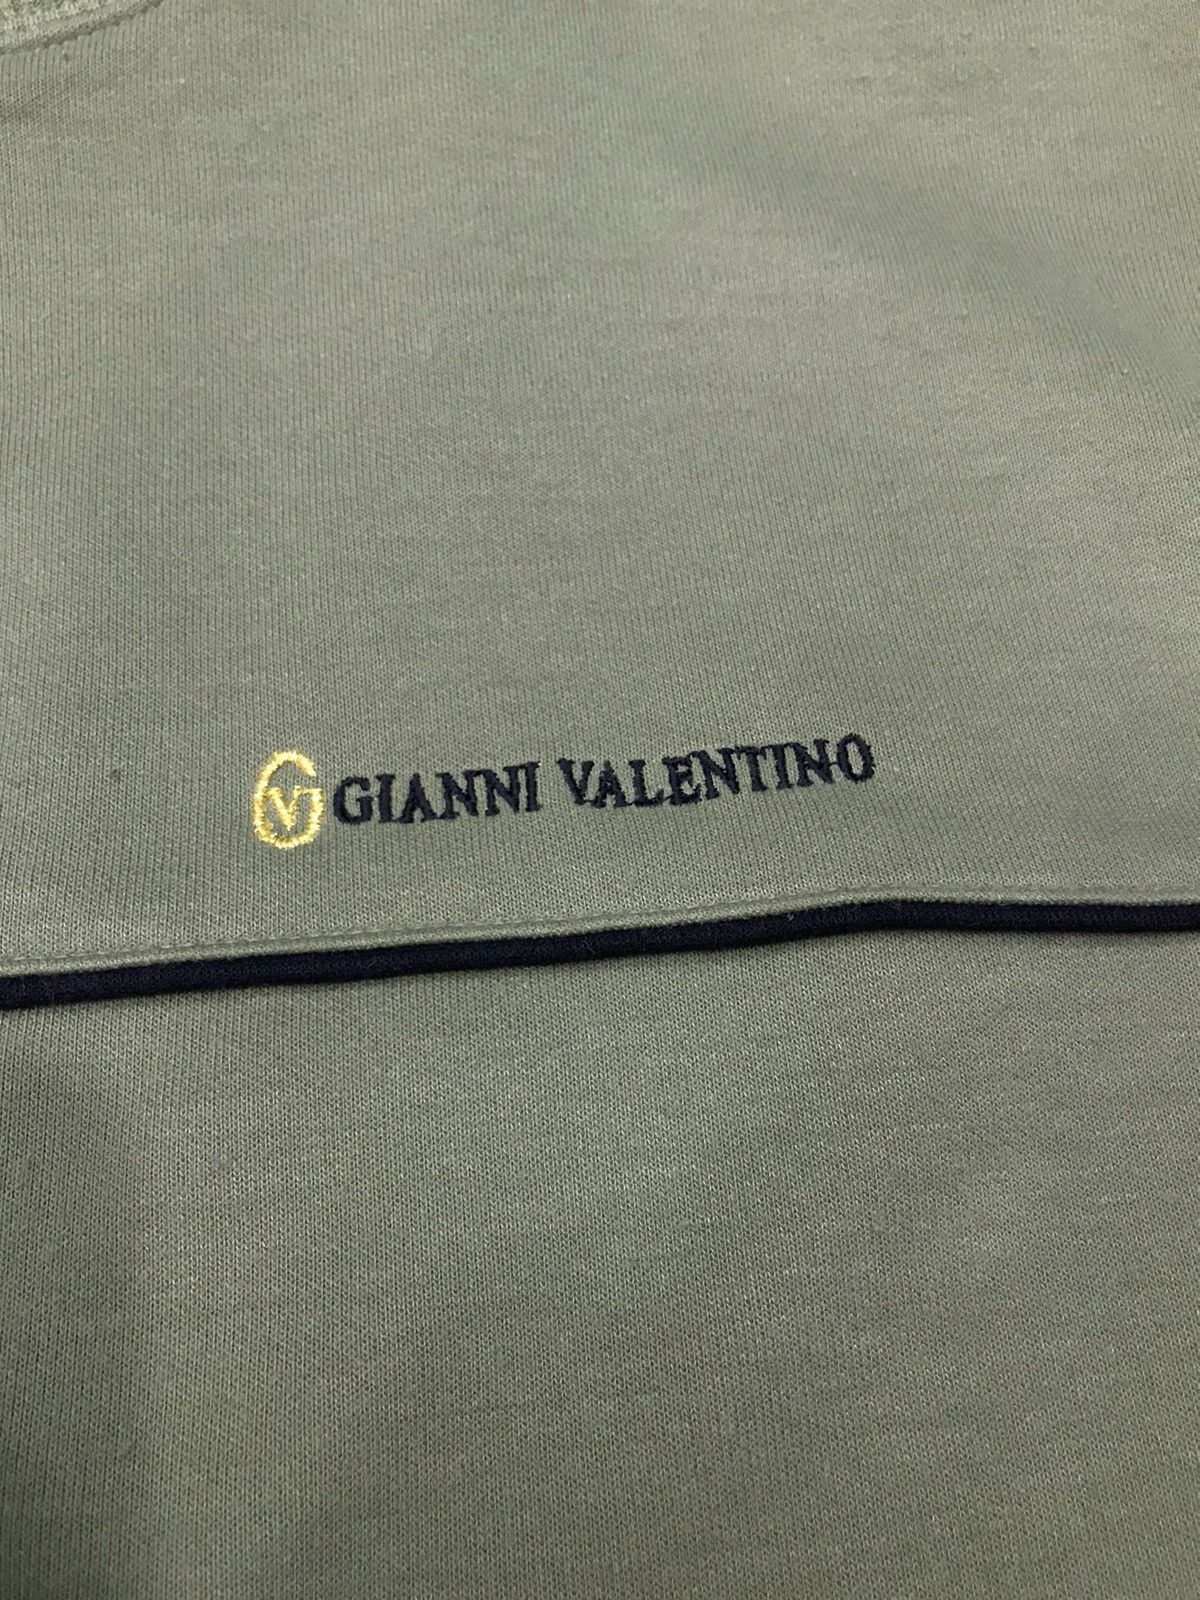 Valentino Vintage Gianni Valentino Crewneck Sweatshirt Size US M / EU 48-50 / 2 - 4 Thumbnail